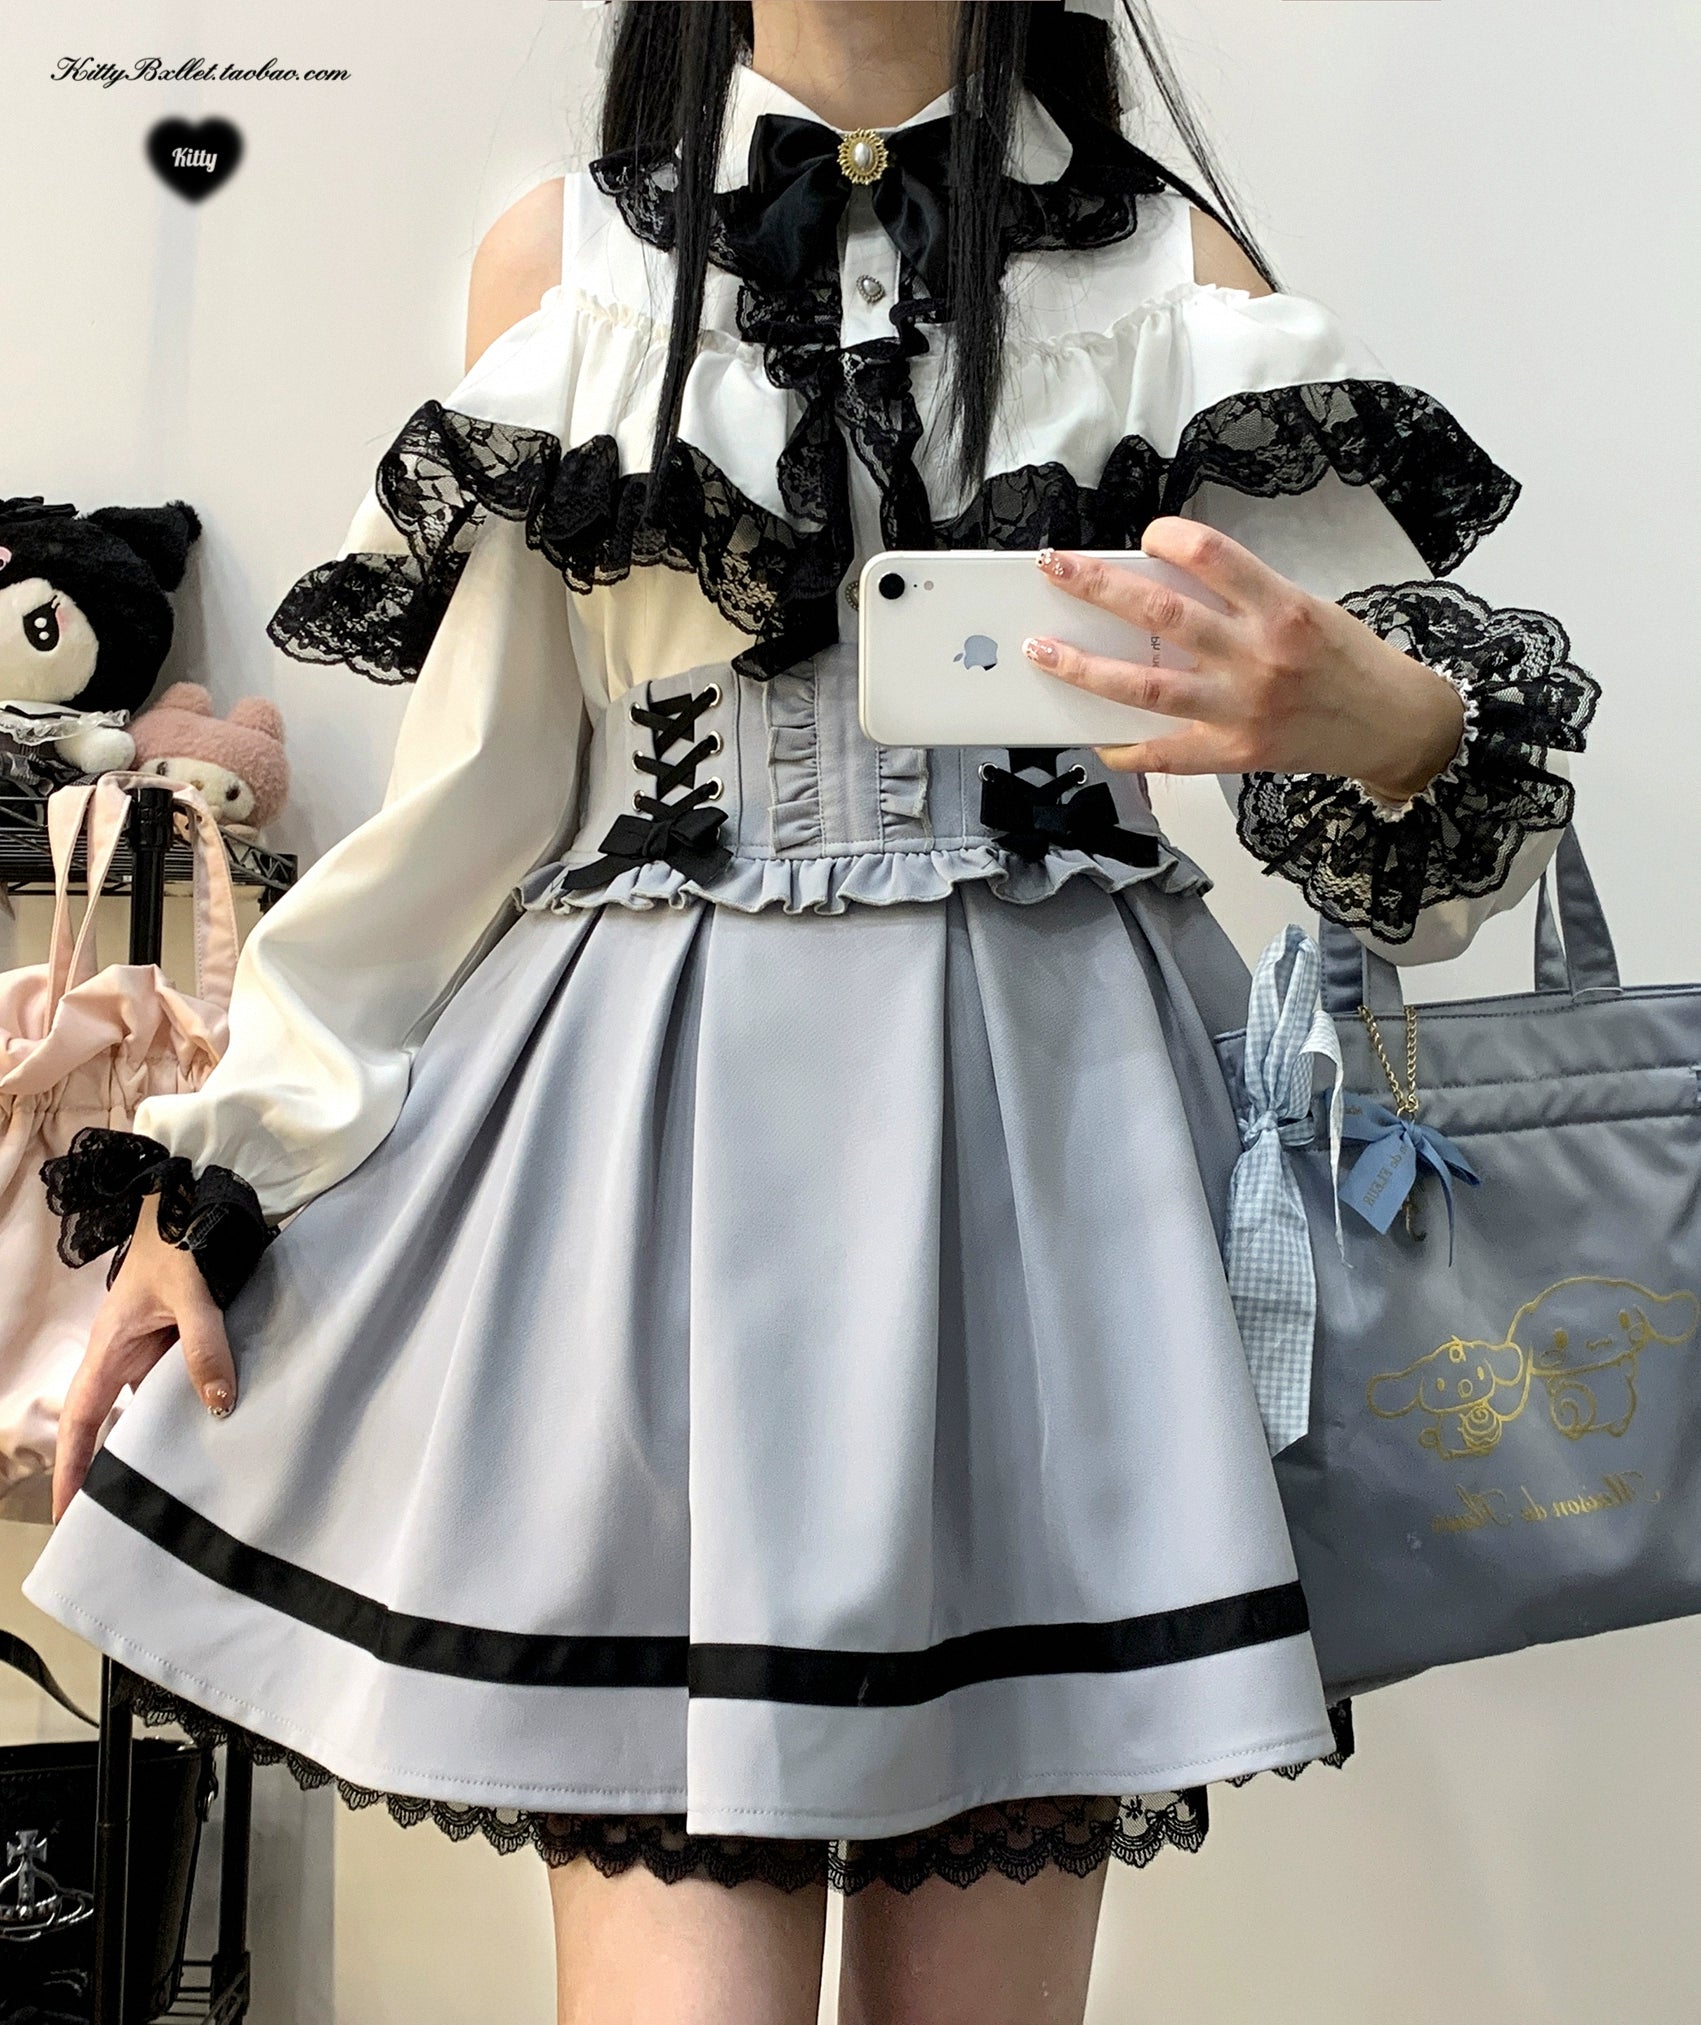 Jirai Kei Skirt High Waist Lace Up Skirt With Bow Tie 31860:396686